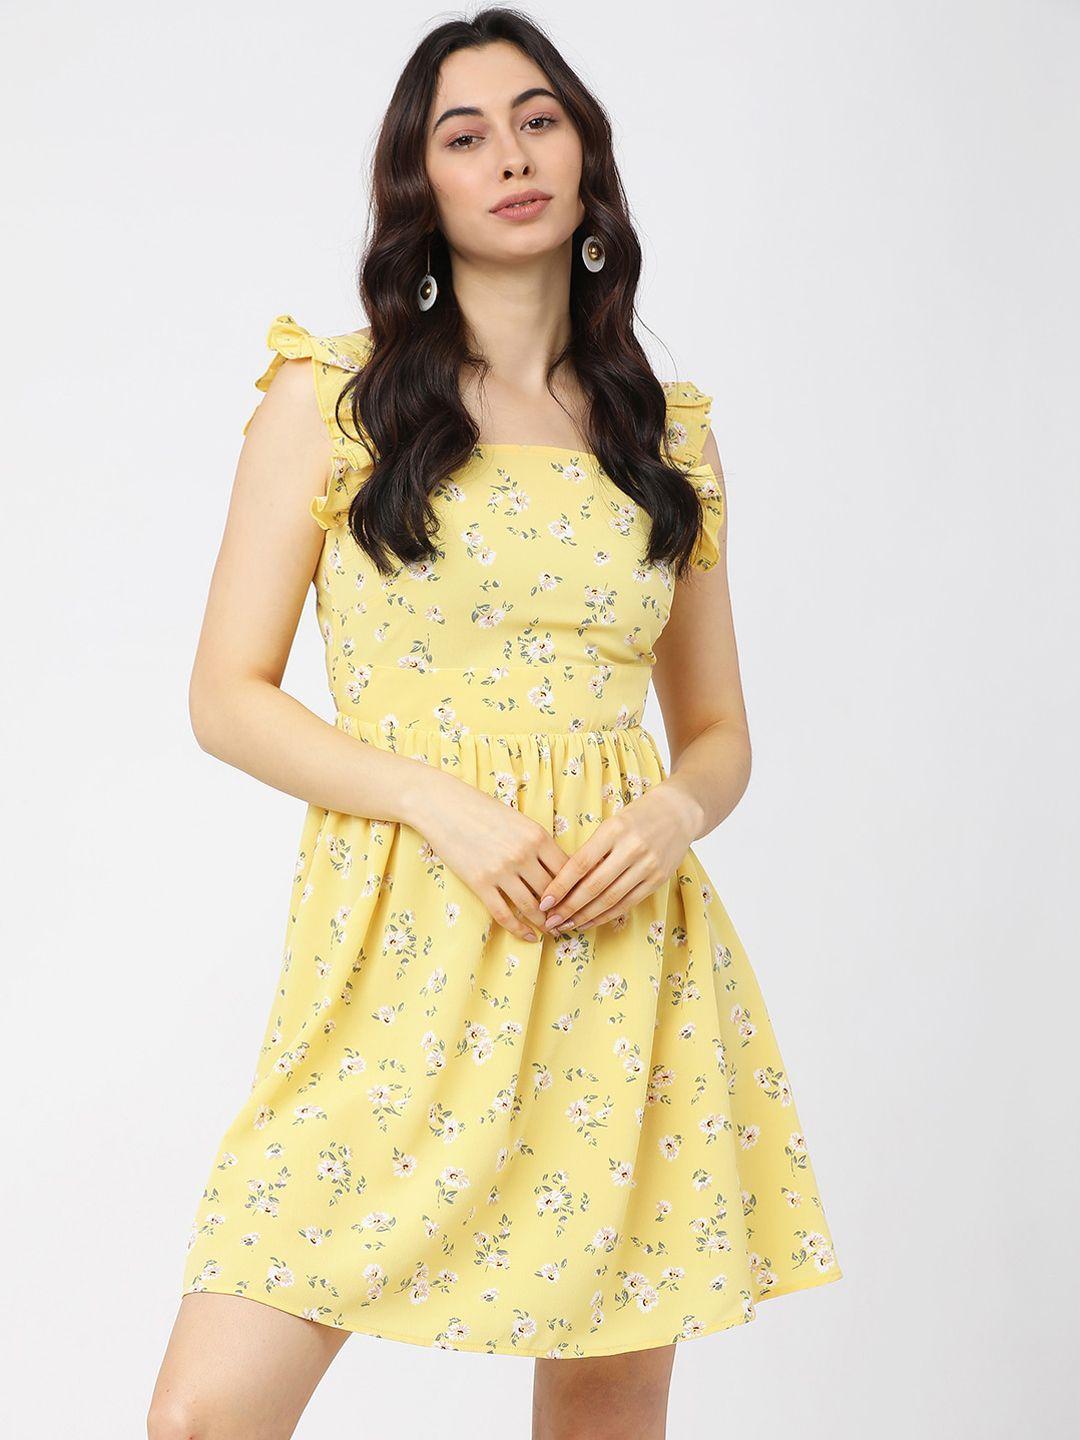 tokyo-talkies-yellow-floral-dress